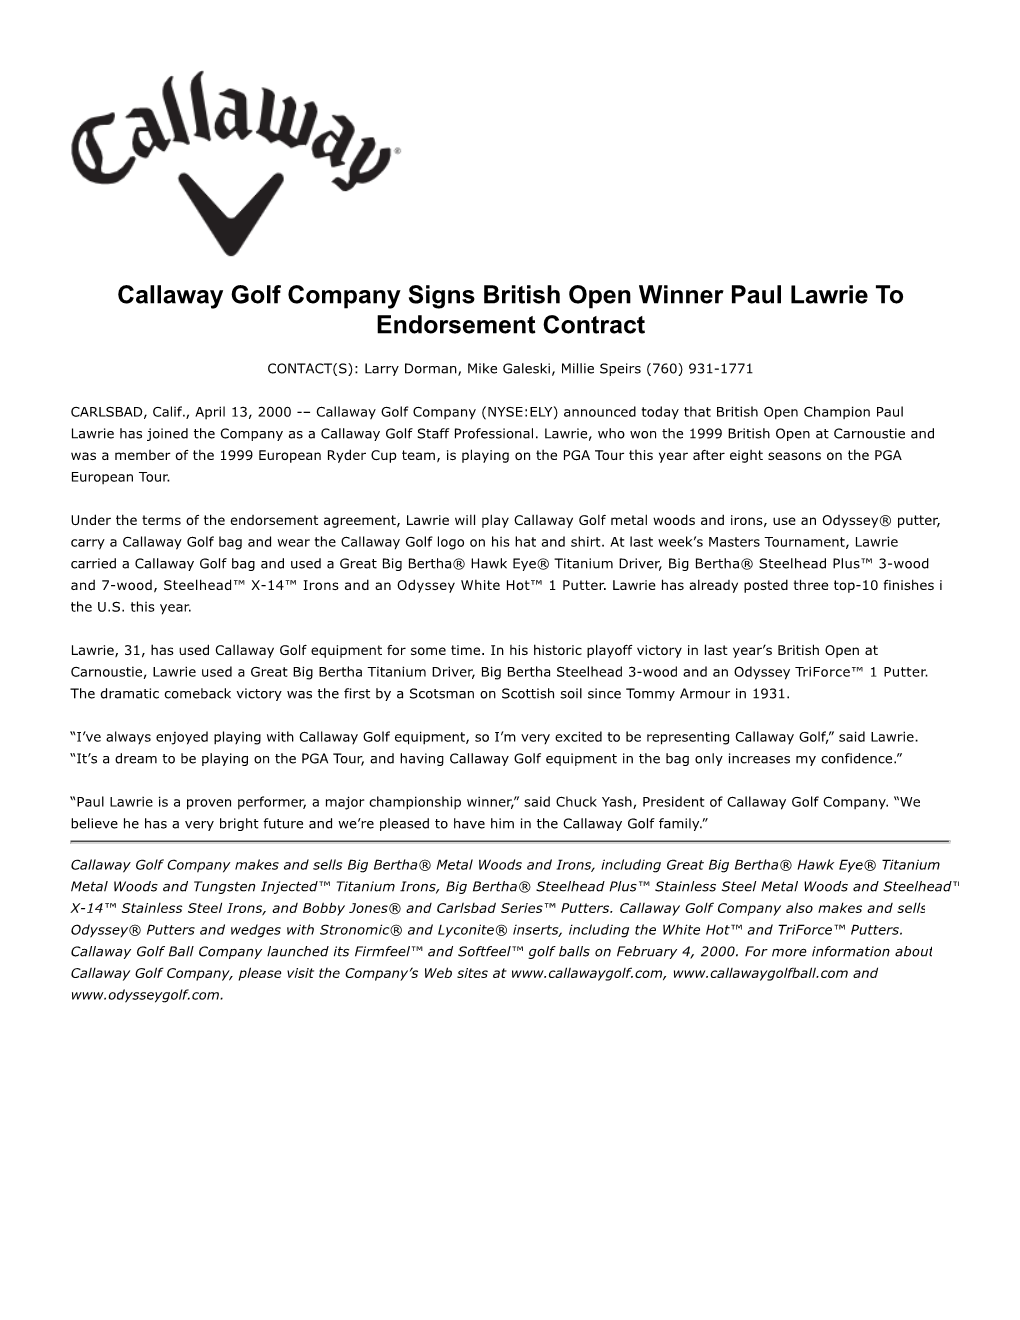 Callaway Golf Company Signs British Open Winner Paul Lawrie to Endorsement Contract